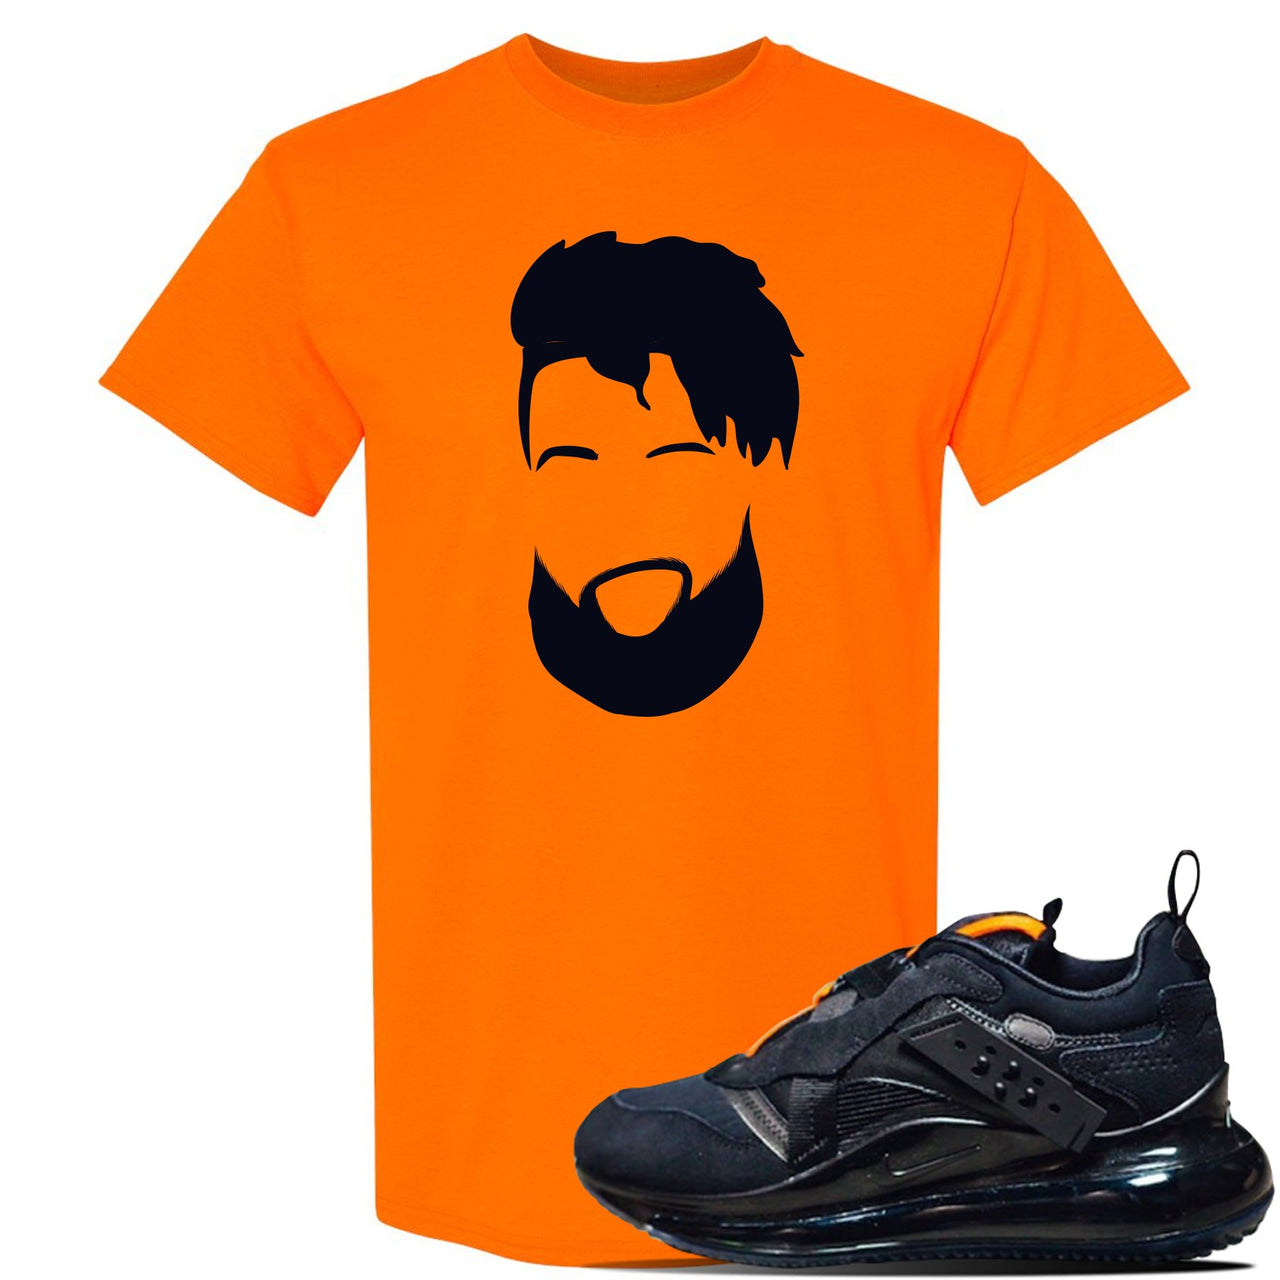 Air Max 720 OBJ Slip Sneaker Safety Orange T Shirt | Tees to match Nike Air Max 720 OBJ Slip Shoes | OBJ Catch